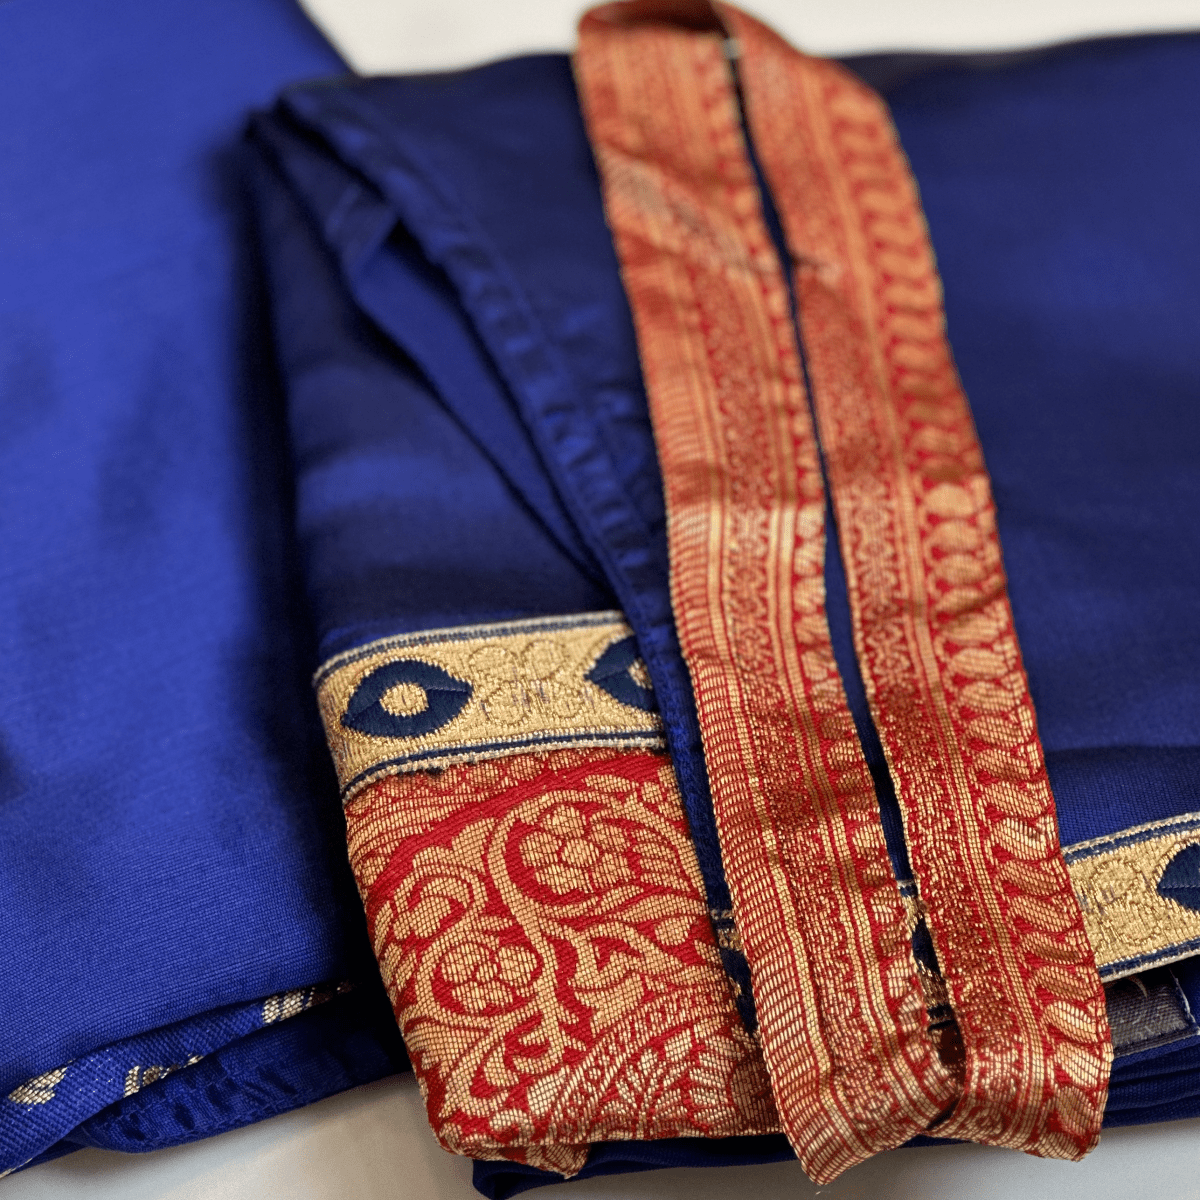 Cool & Casual Handmade Sari Aprons-Dark Teal with Gold Trim #6-Magic Hour